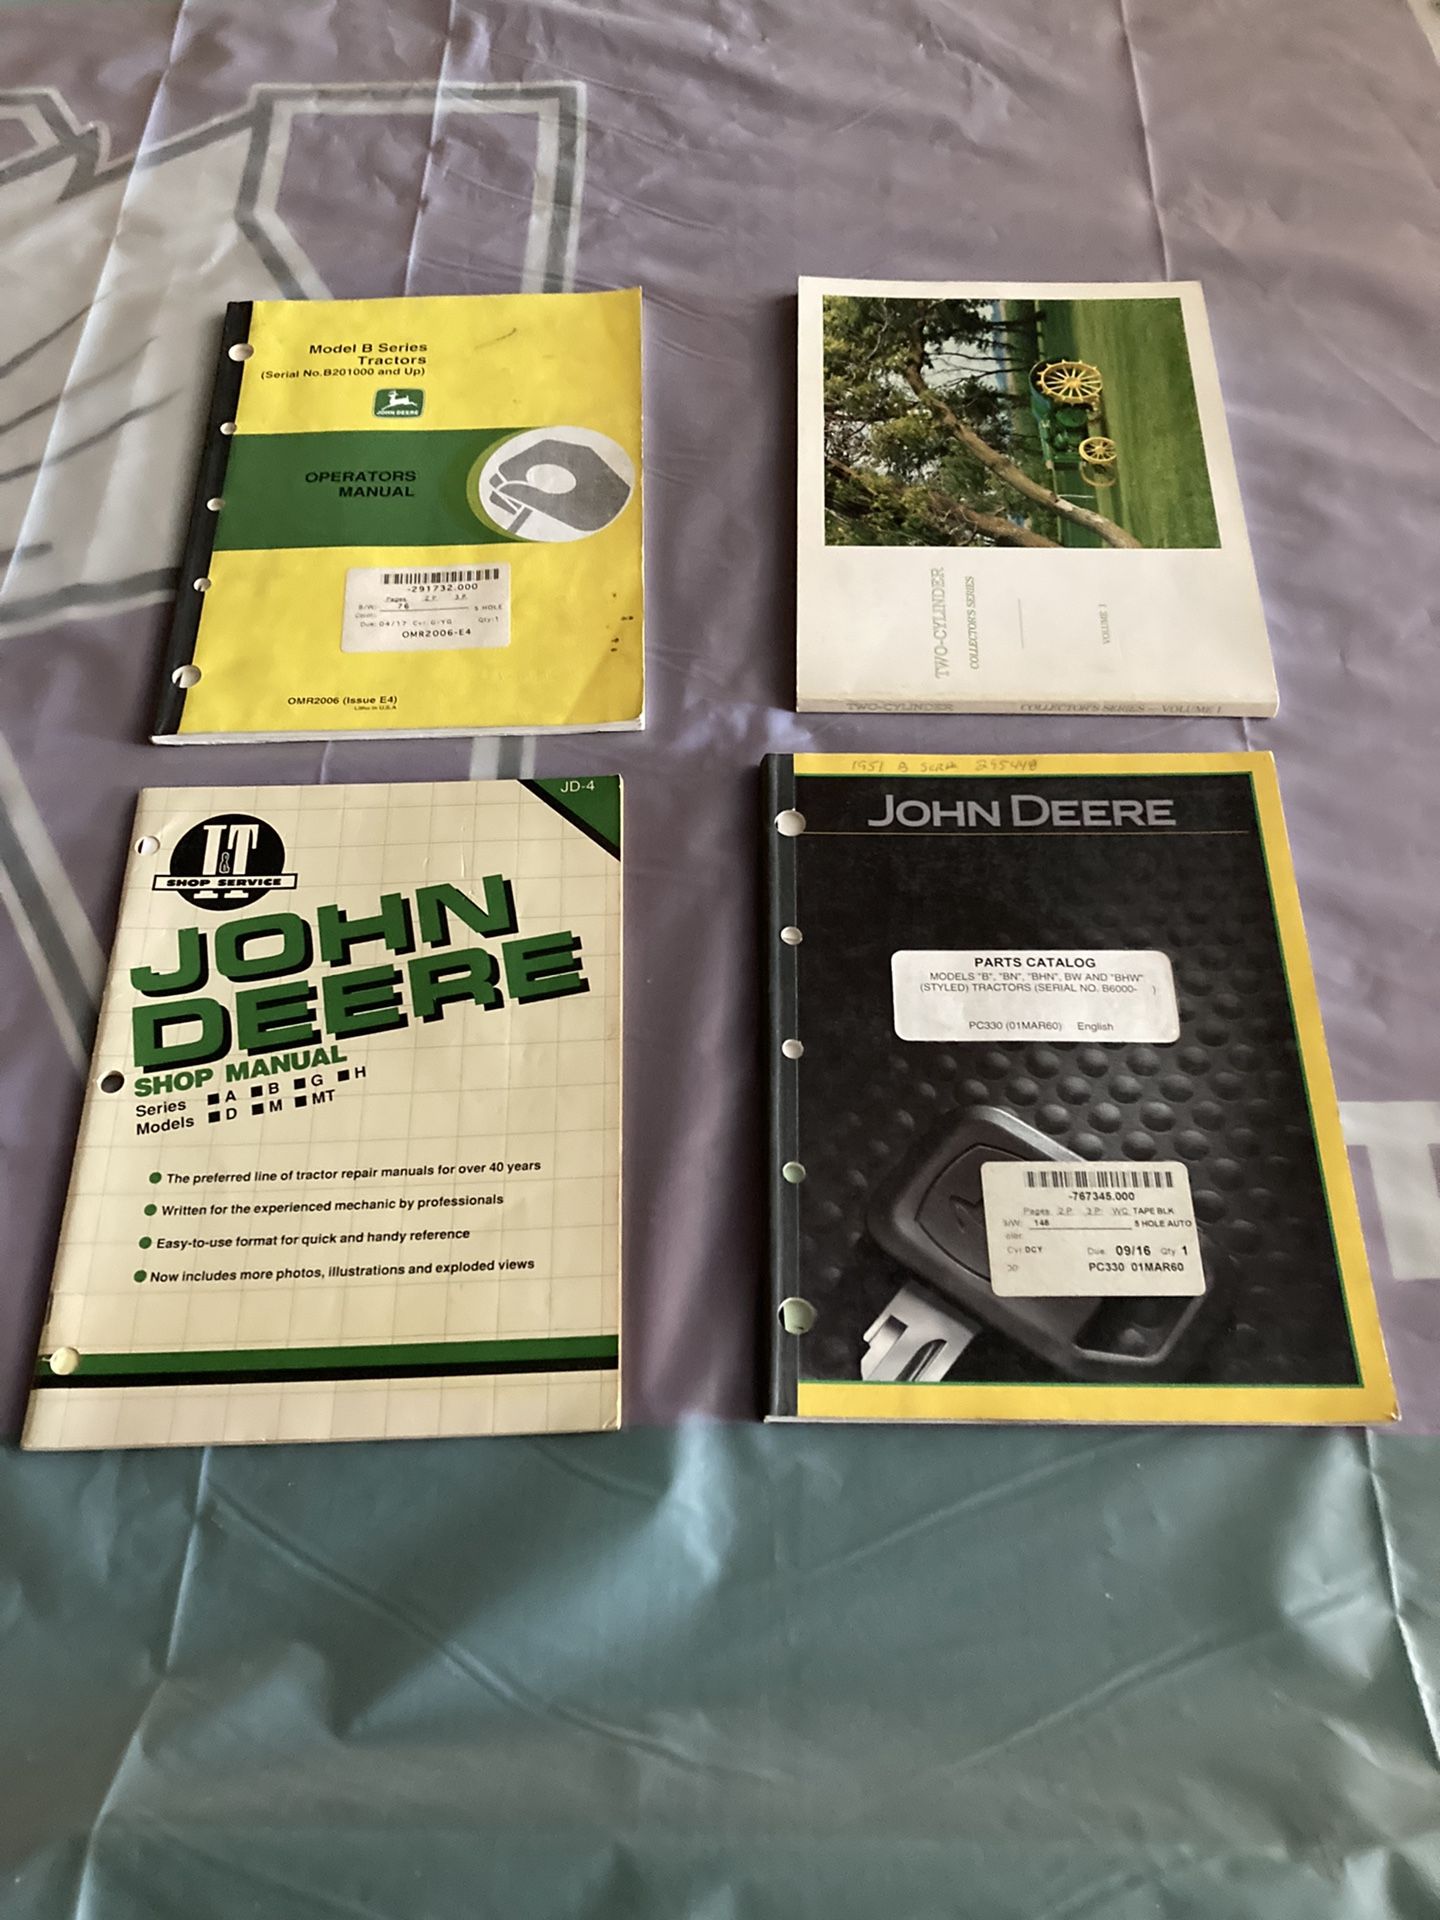 John Deere tractor manuals/catalogs